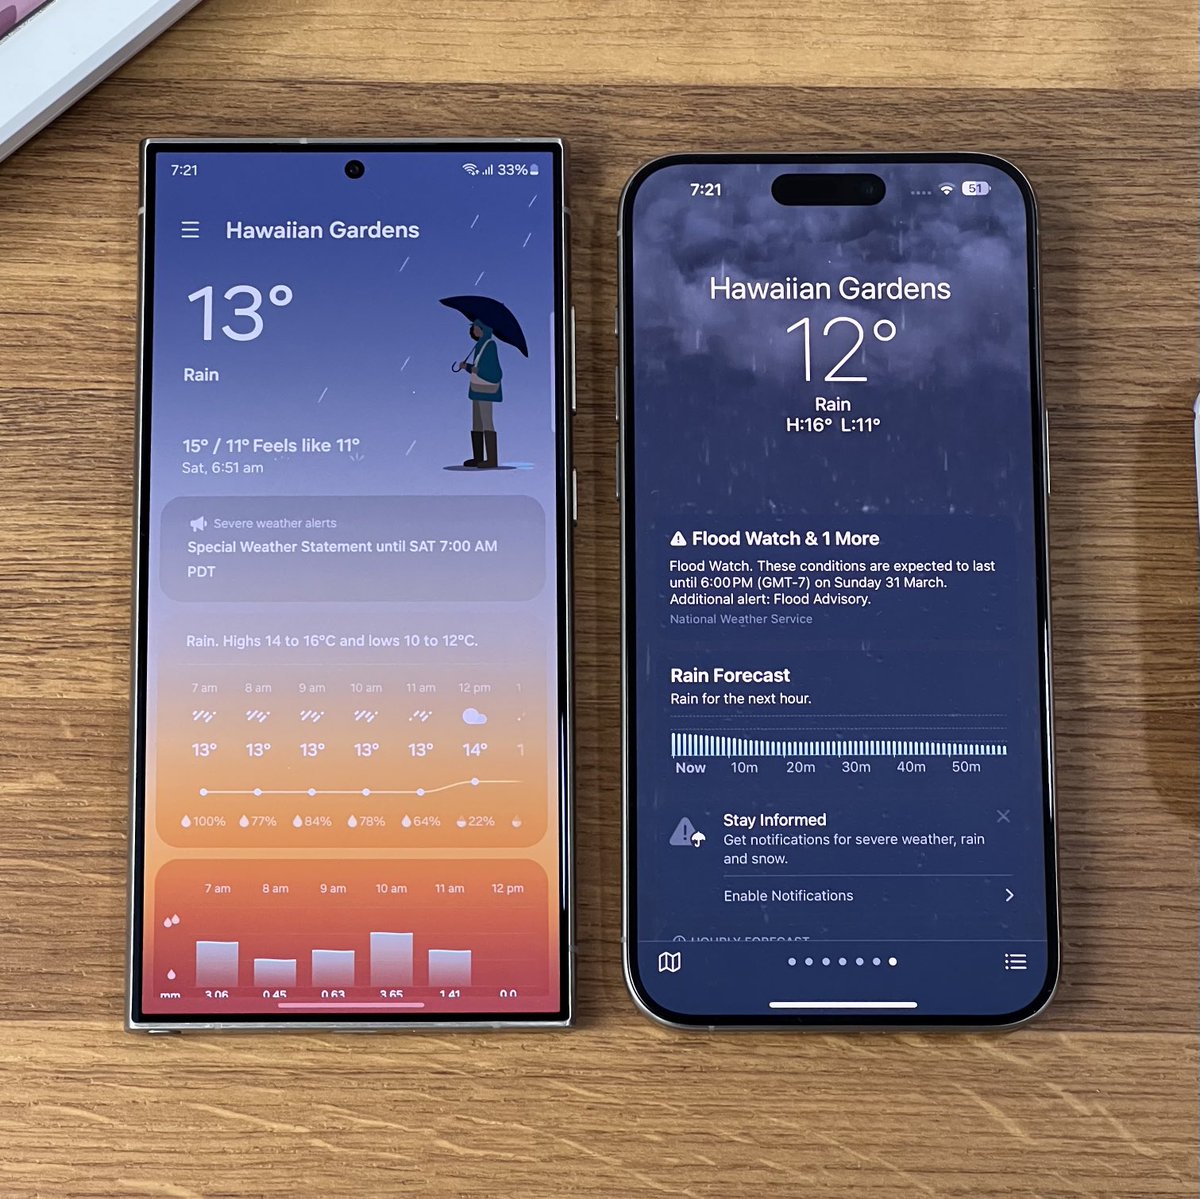 No one beats Samsung's weather UI 😬💯